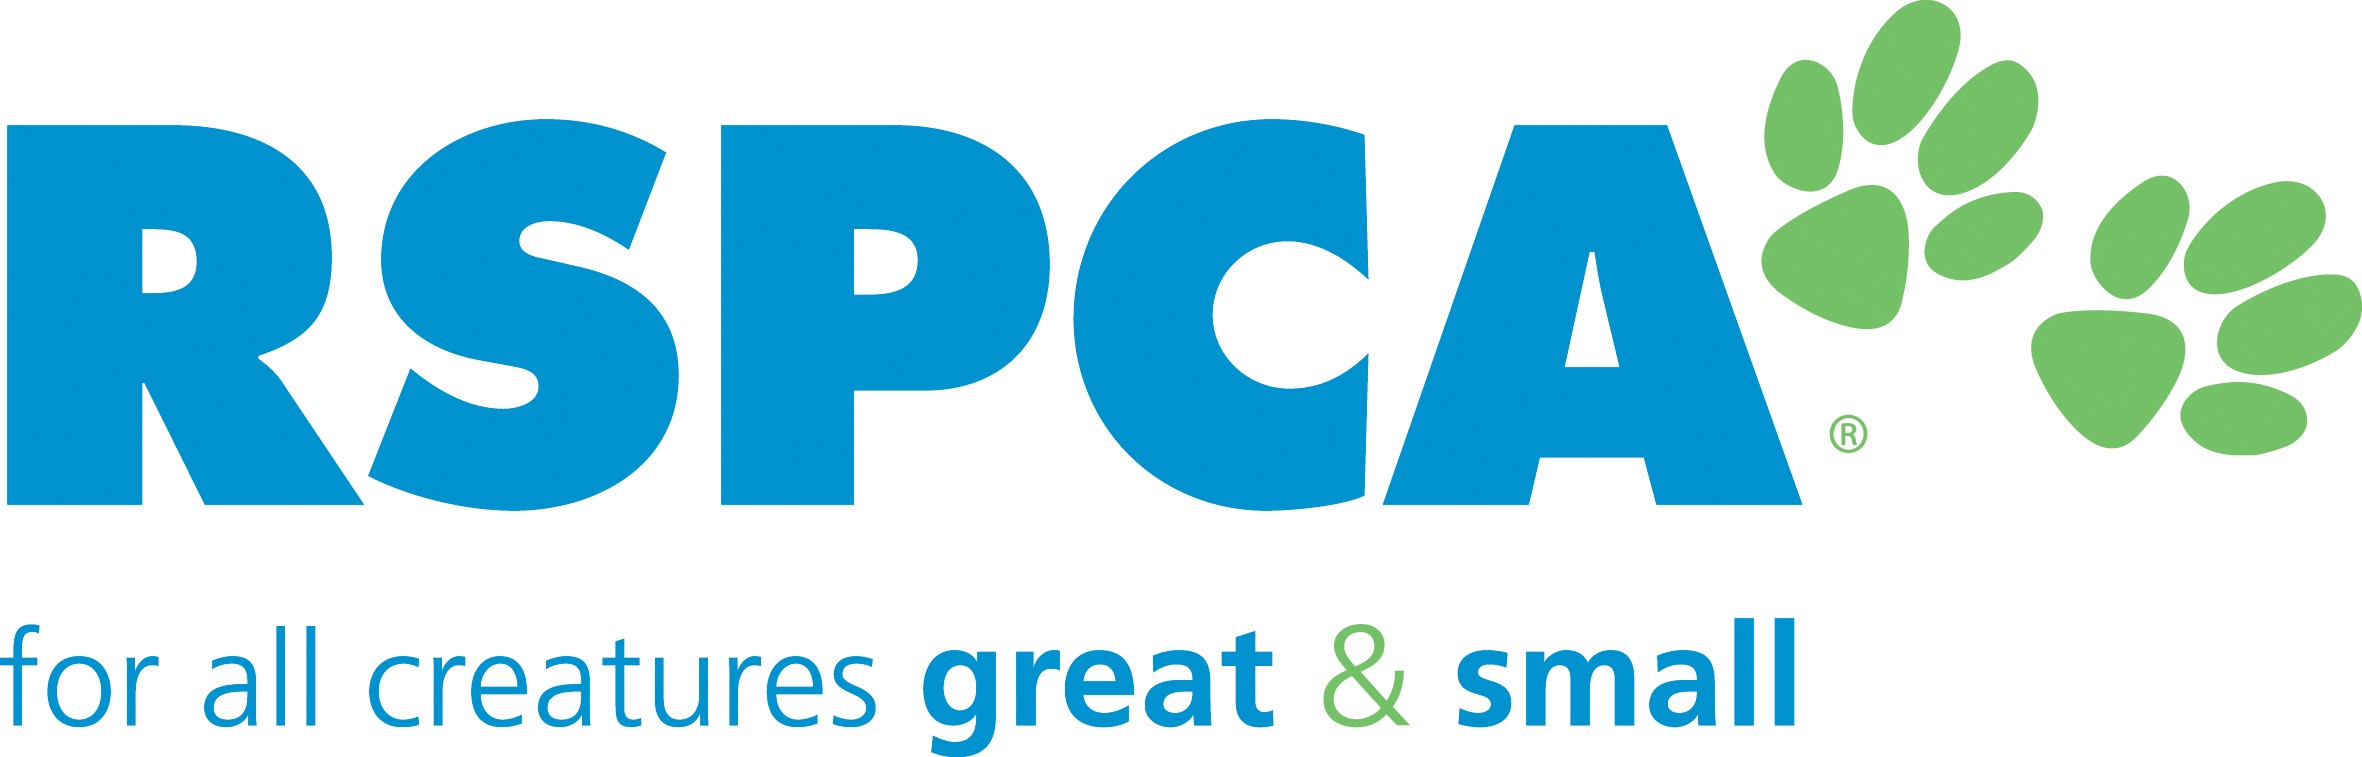 Rspca Logo PNG - 175448